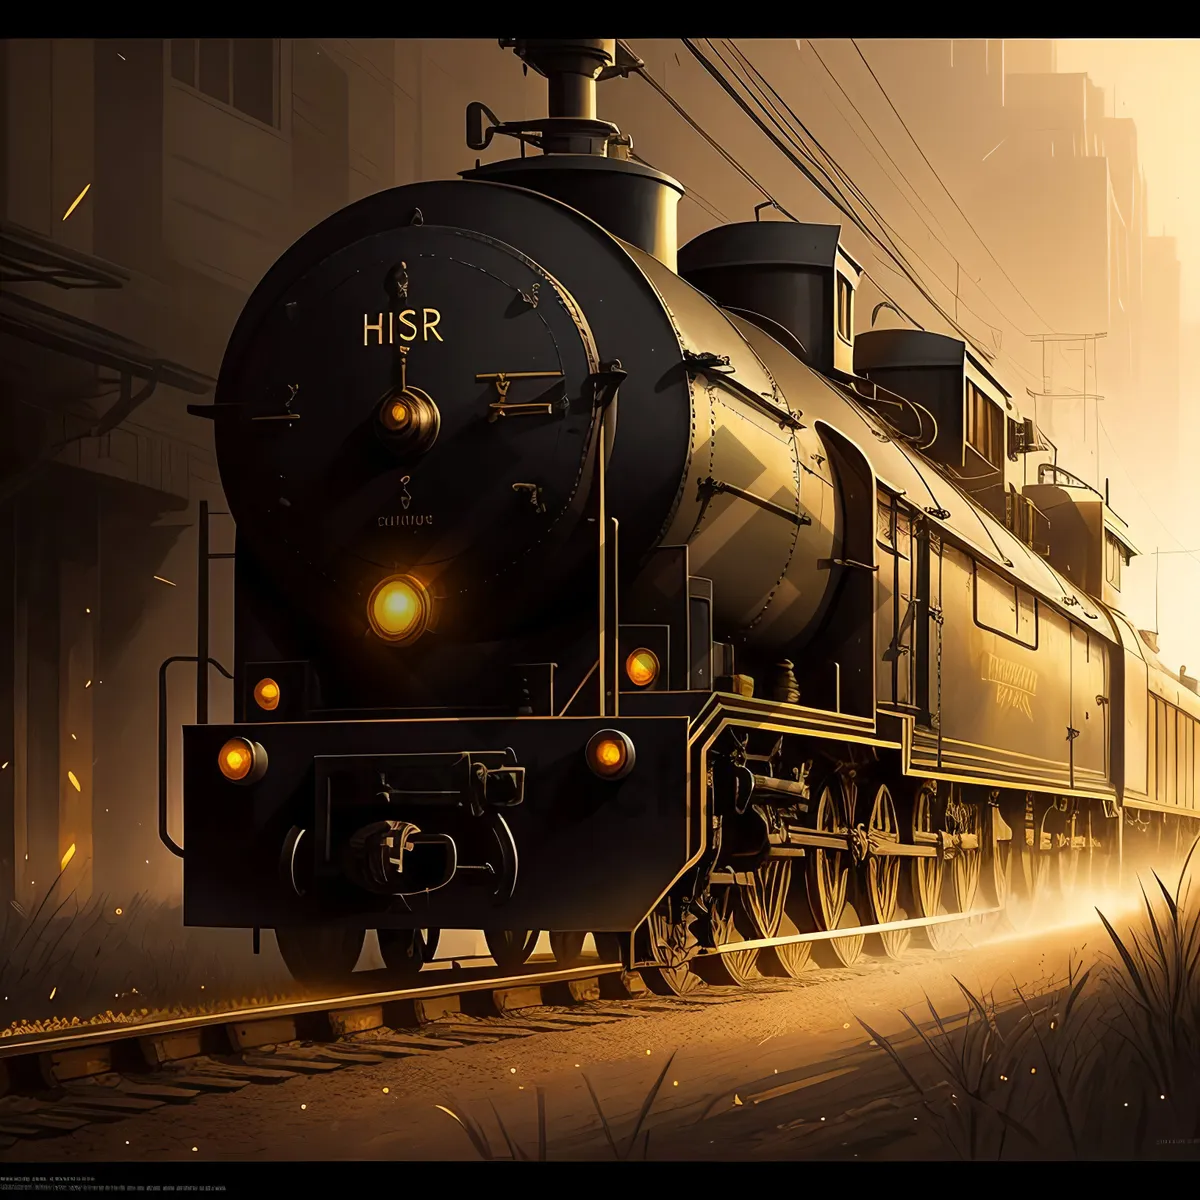 Picture of Vintage Steam Locomotive on Railway Track